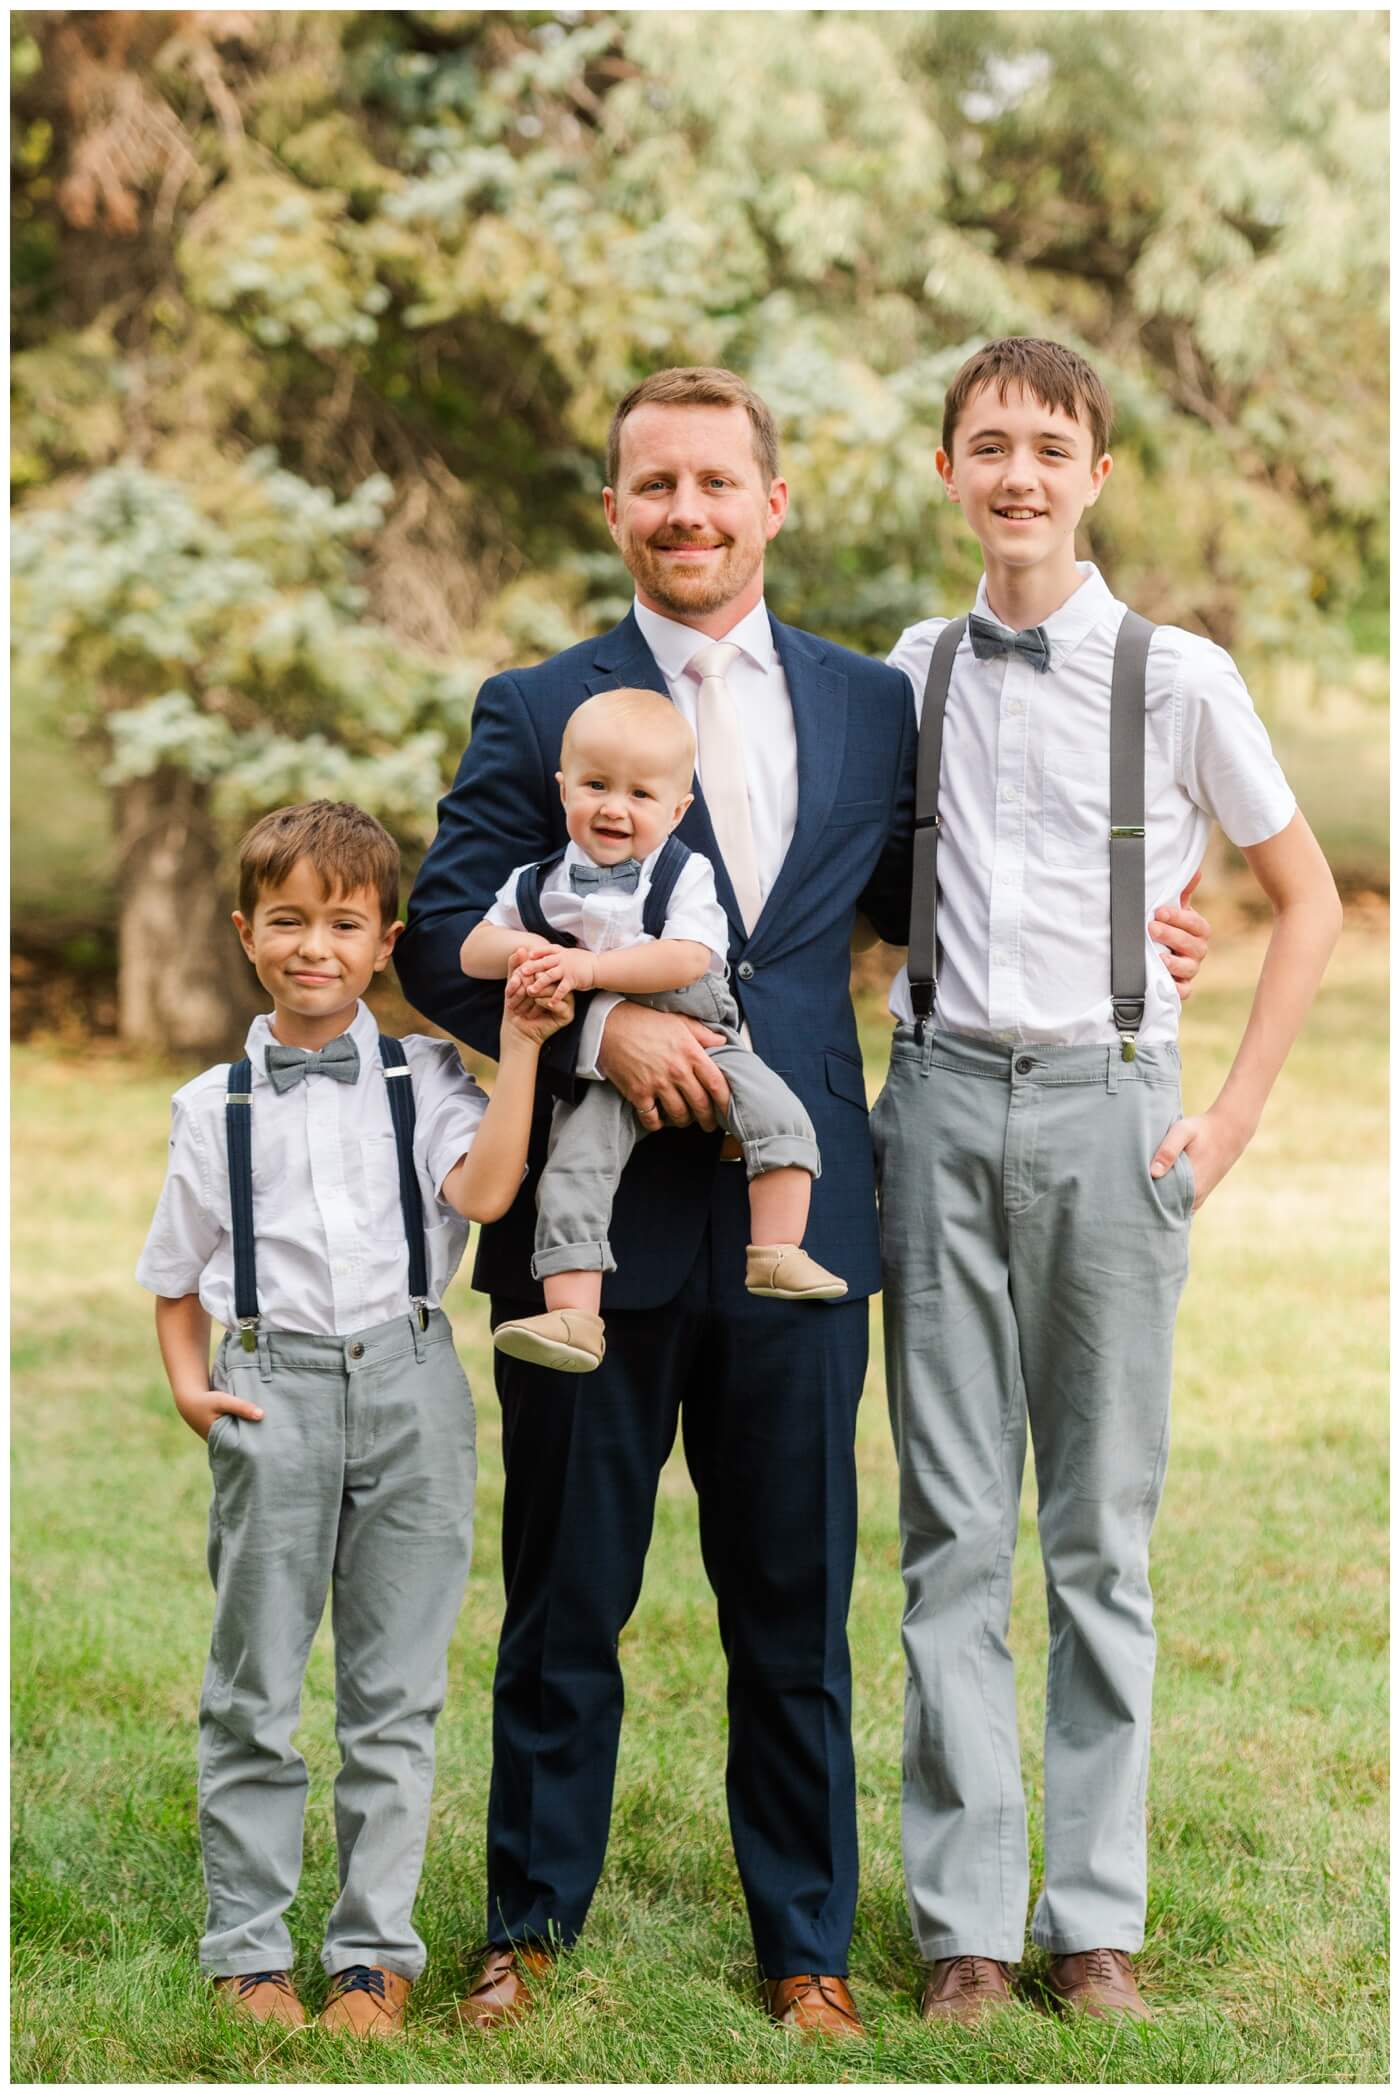 Adam & Caitlin - 02 - Regina Wedding - Groom with his sons in grey pants and suspenders